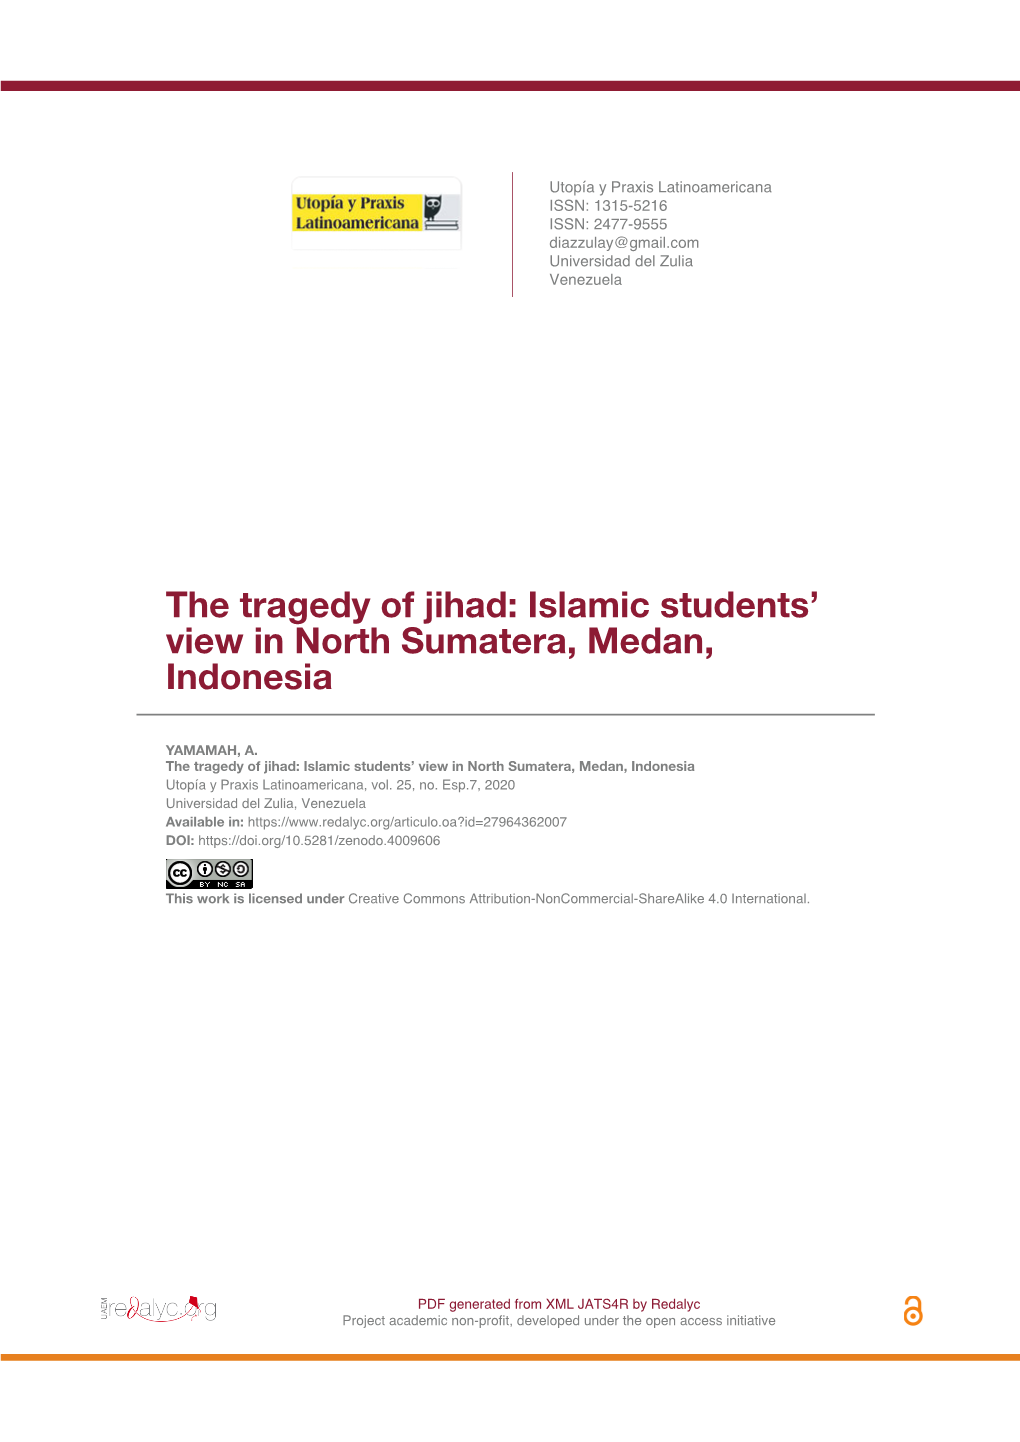 The Tragedy of Jihad: Islamic Students' View in North Sumatera, Medan